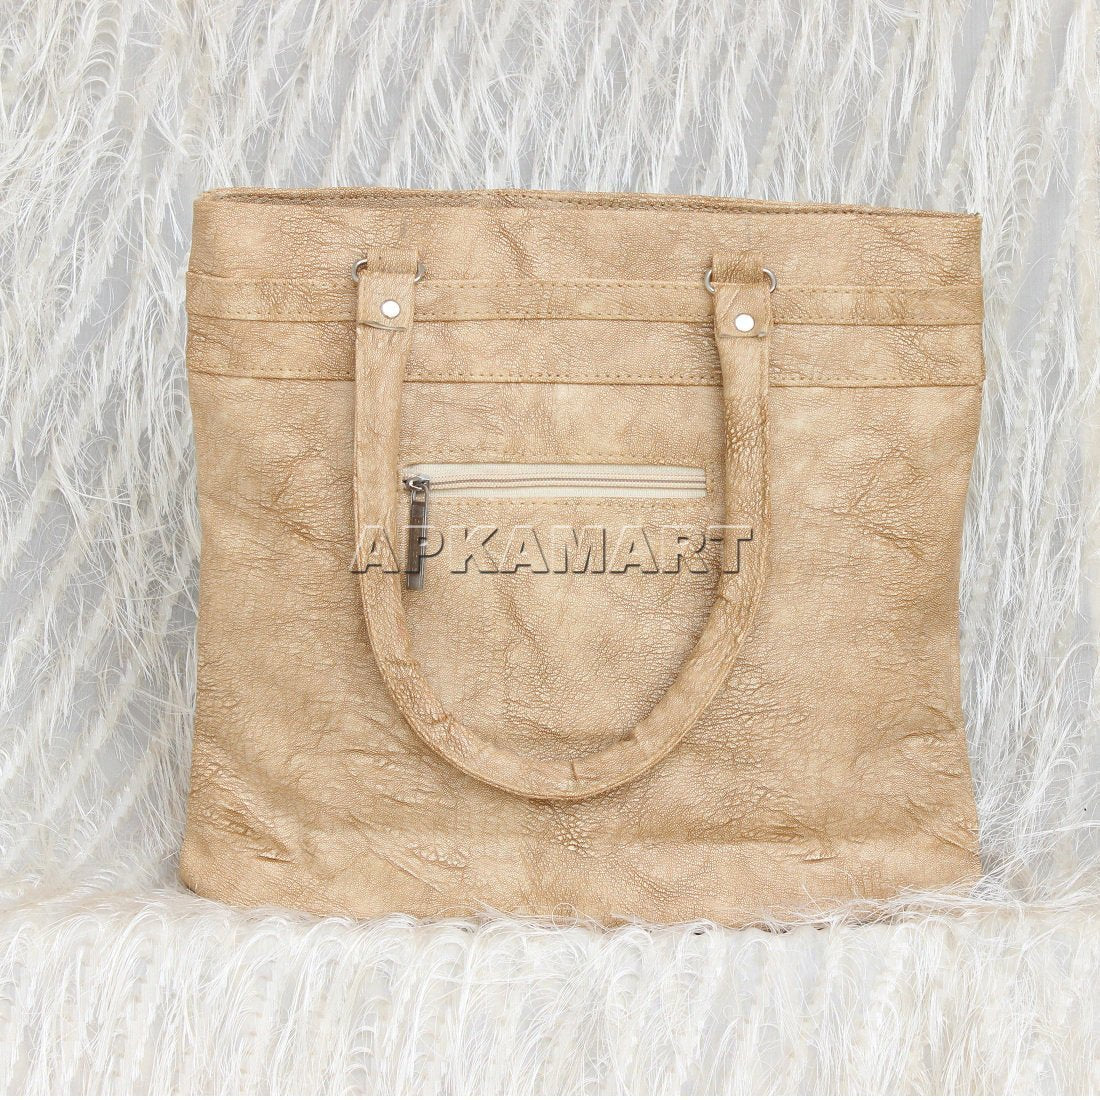 Women's Designer Bags & Purses - Luxury Handbags | LOUIS VUITTON ®